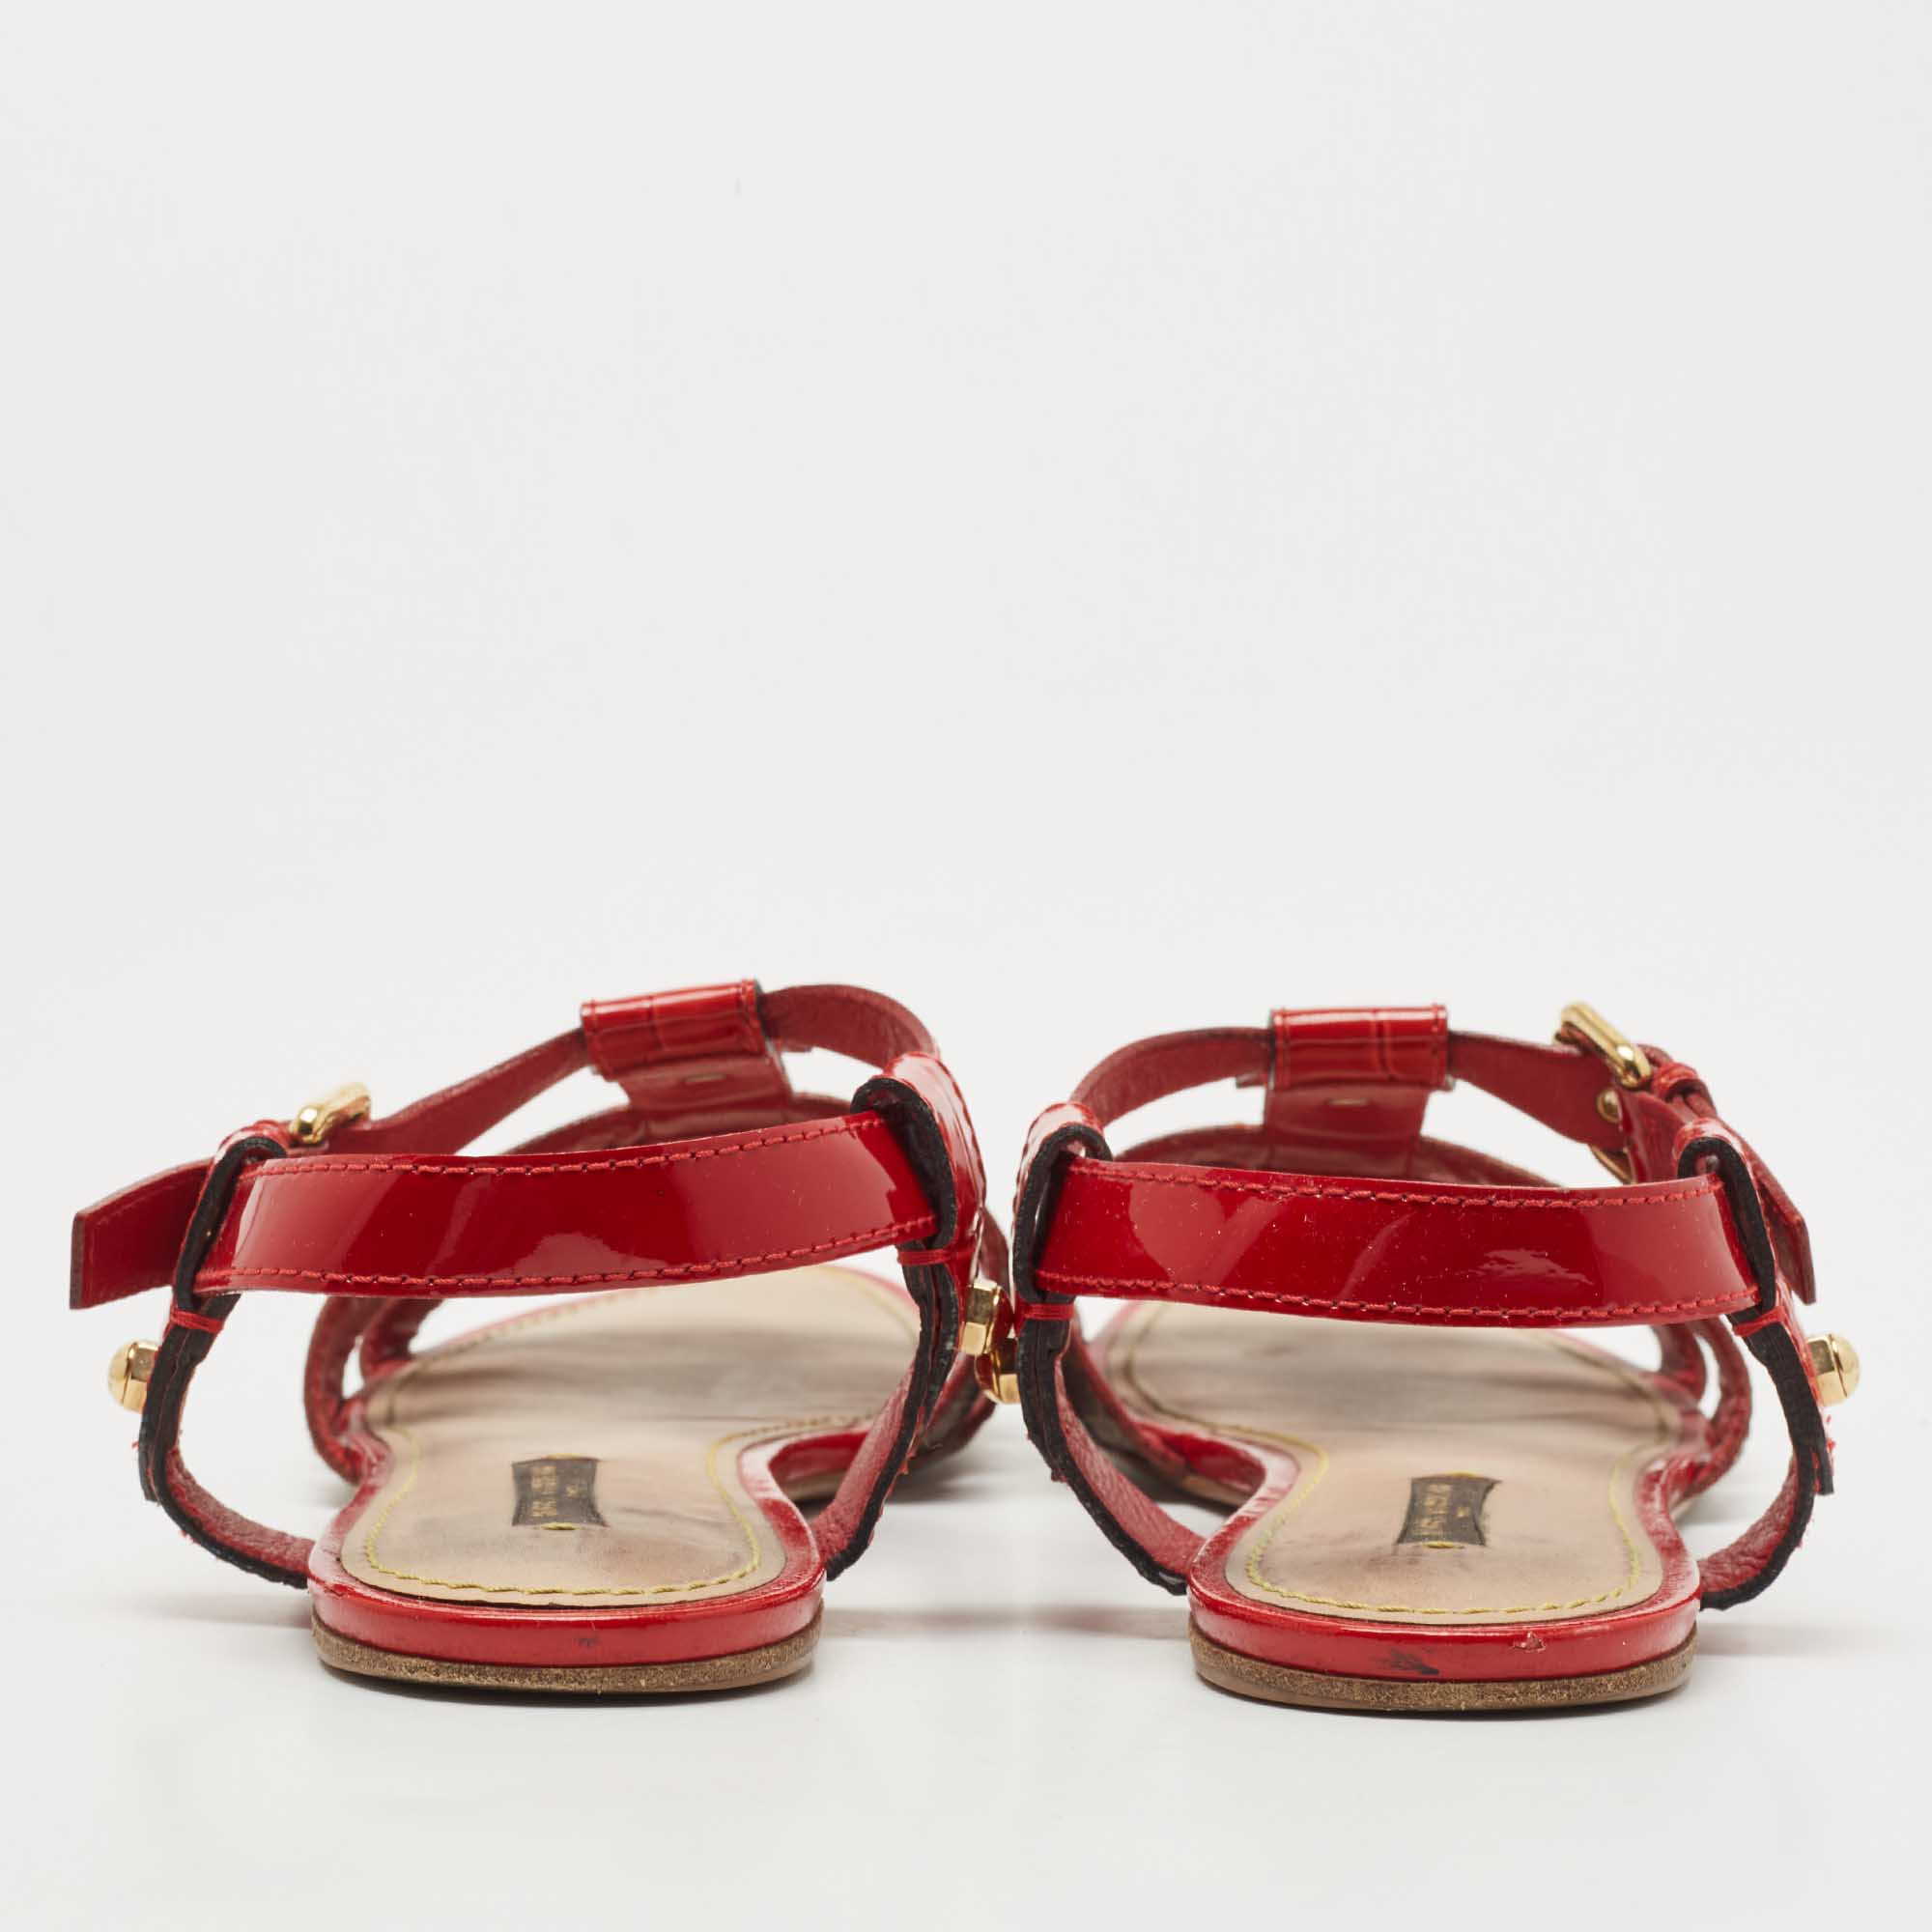 Louis Vuitton Tricolor Monogram Canvas And Patent Leather Ankle Strap Flat Sandals Size 37.5